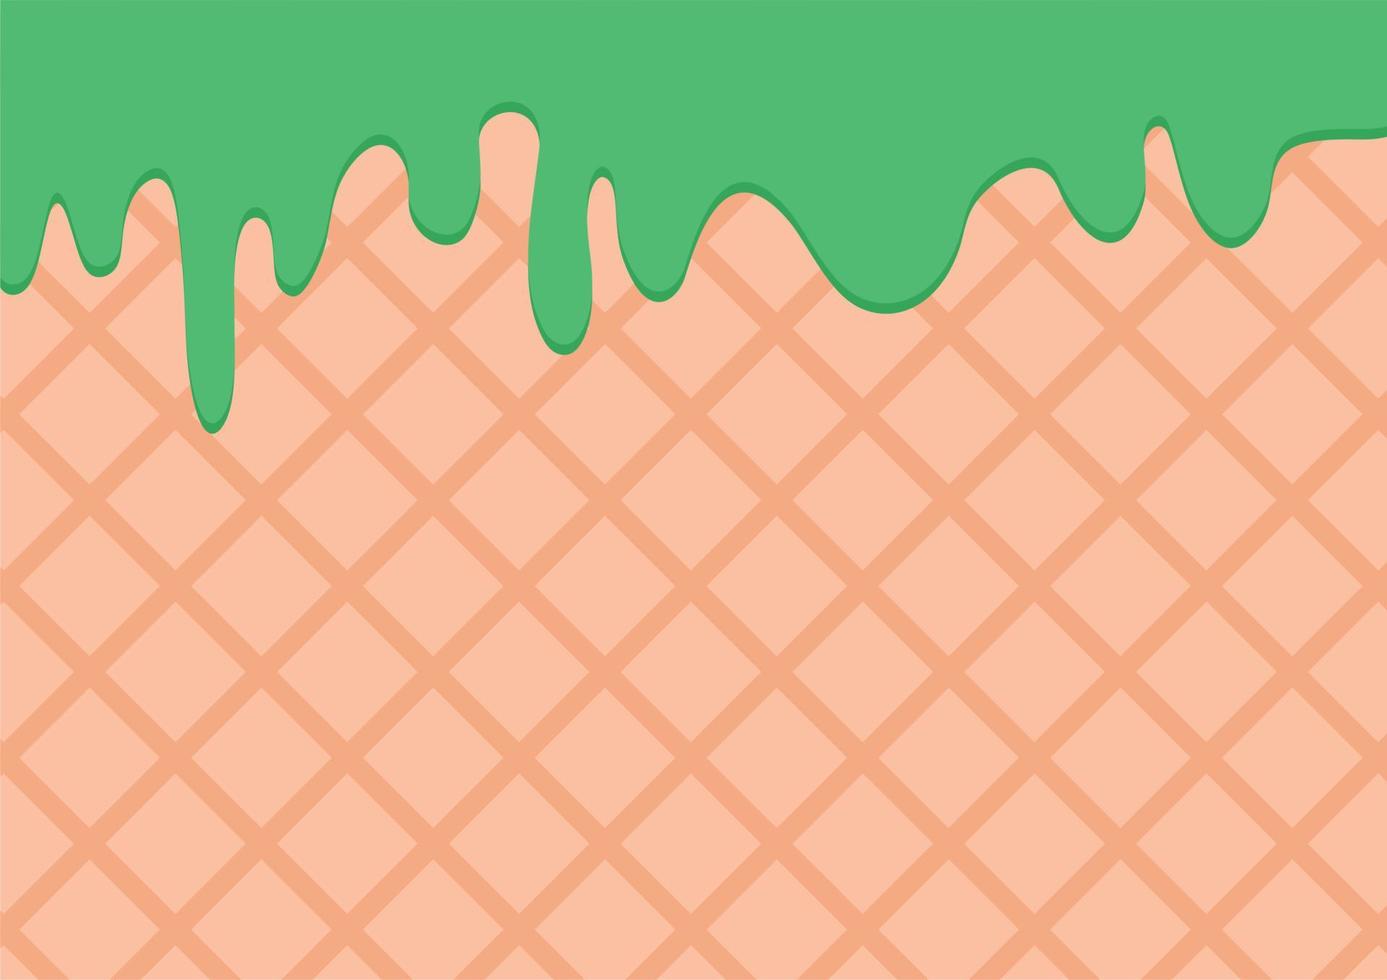 Green Cream Melted on Wafer Background. Vector Illustration.